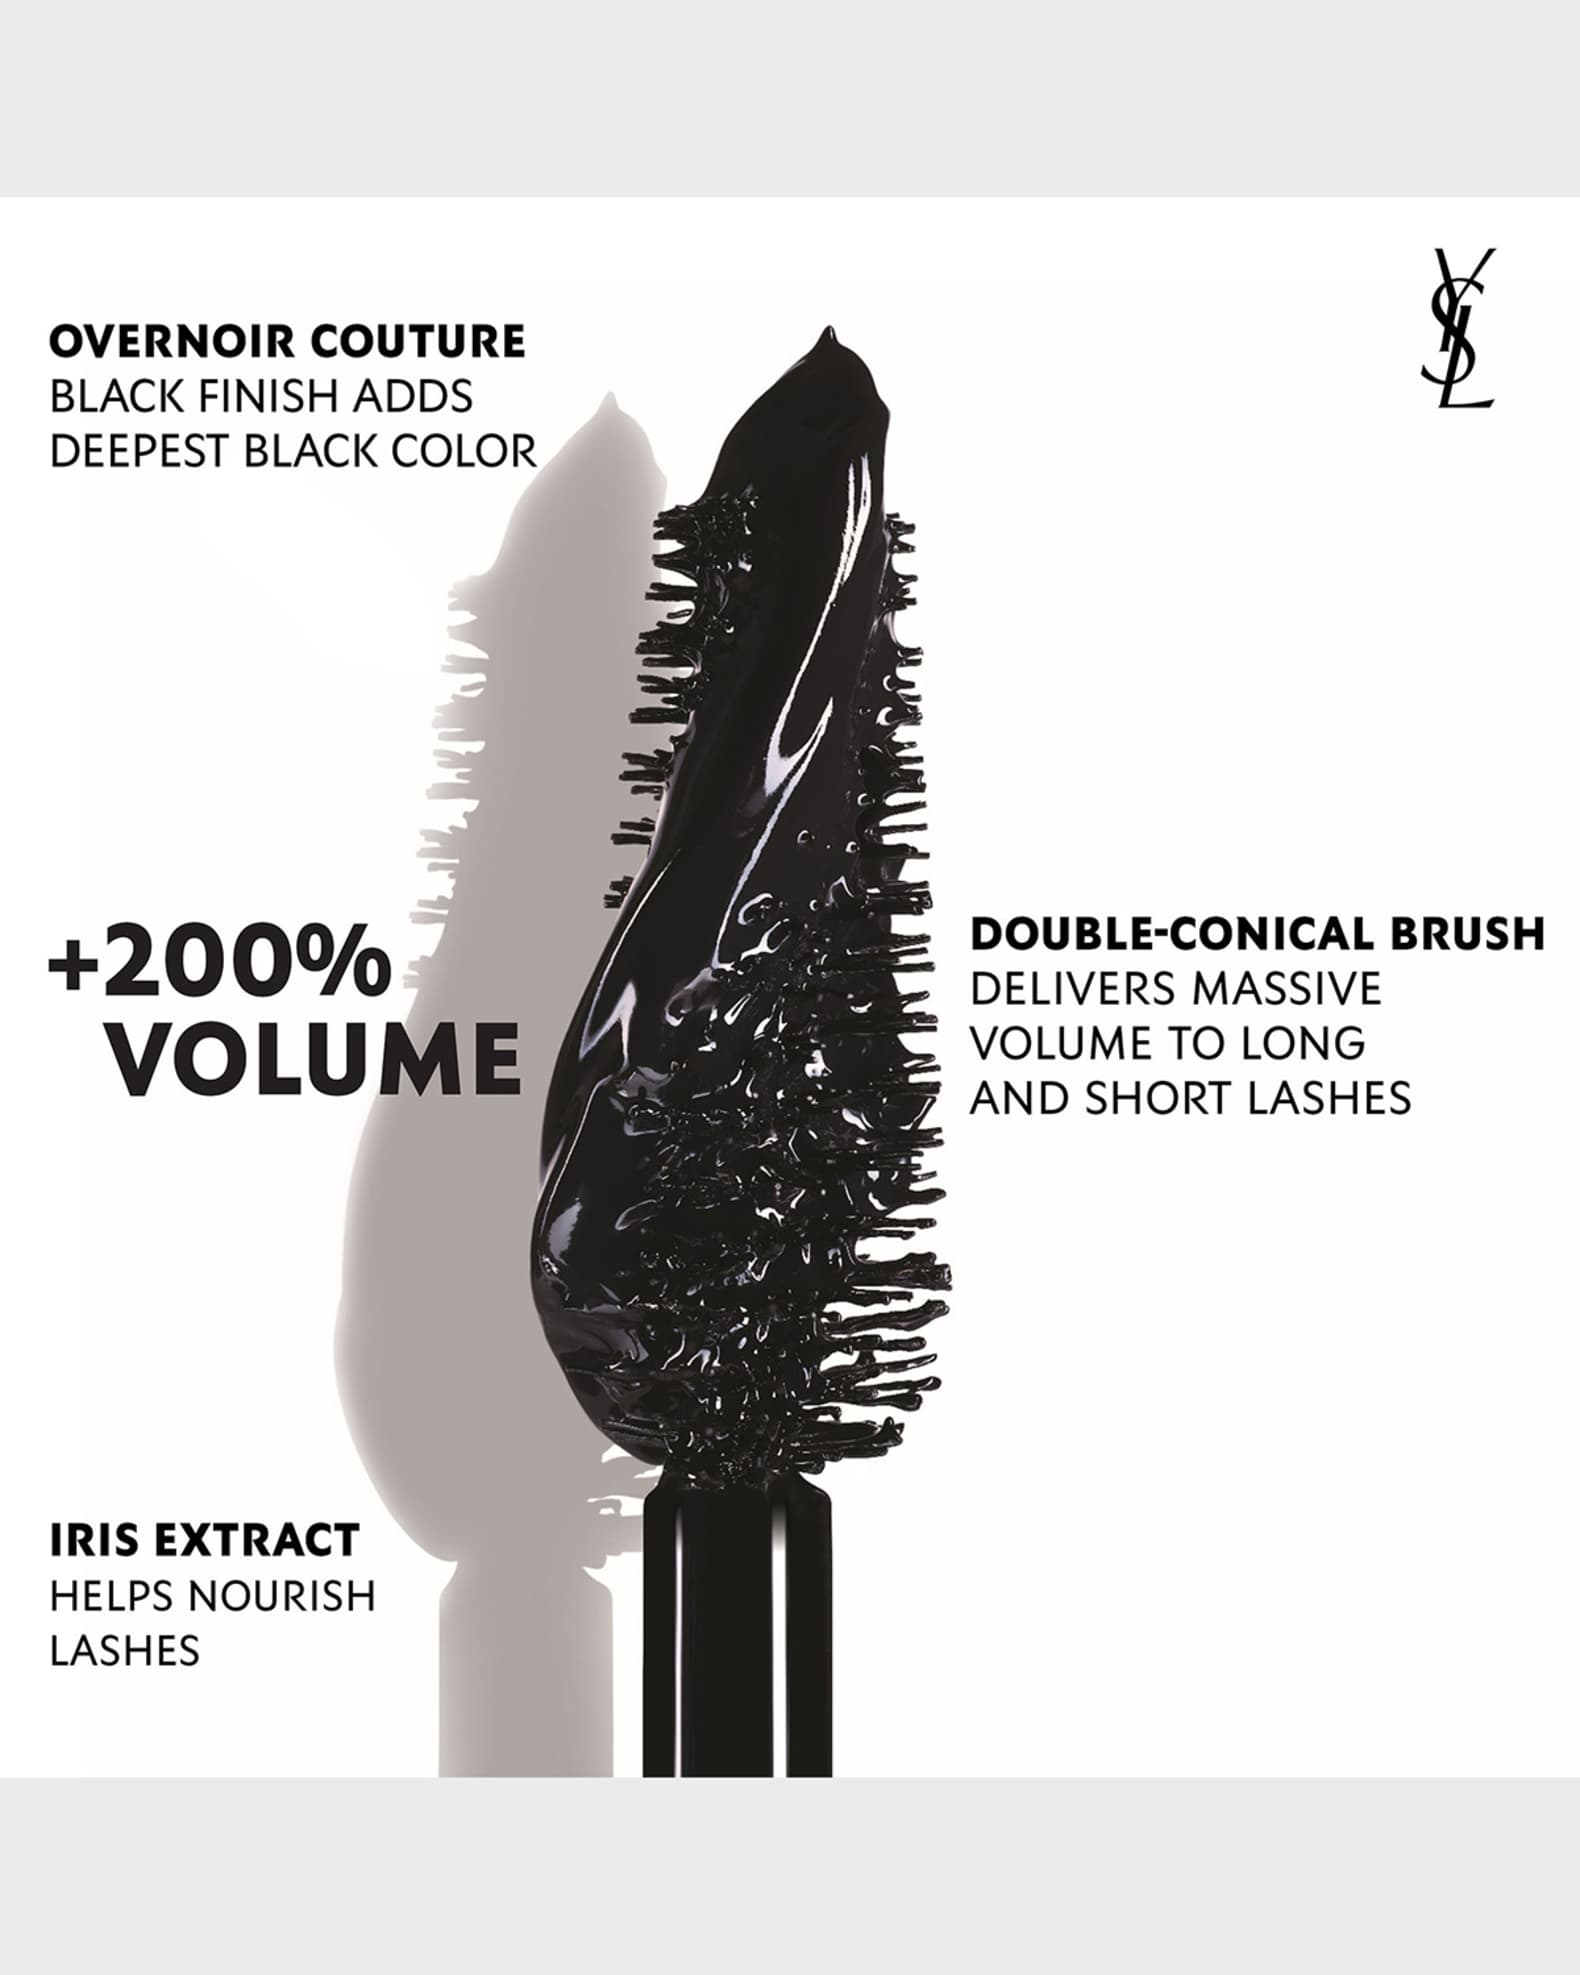 Yves Saint Laurent Beaute Lash Clash Extreme Volume Mascara